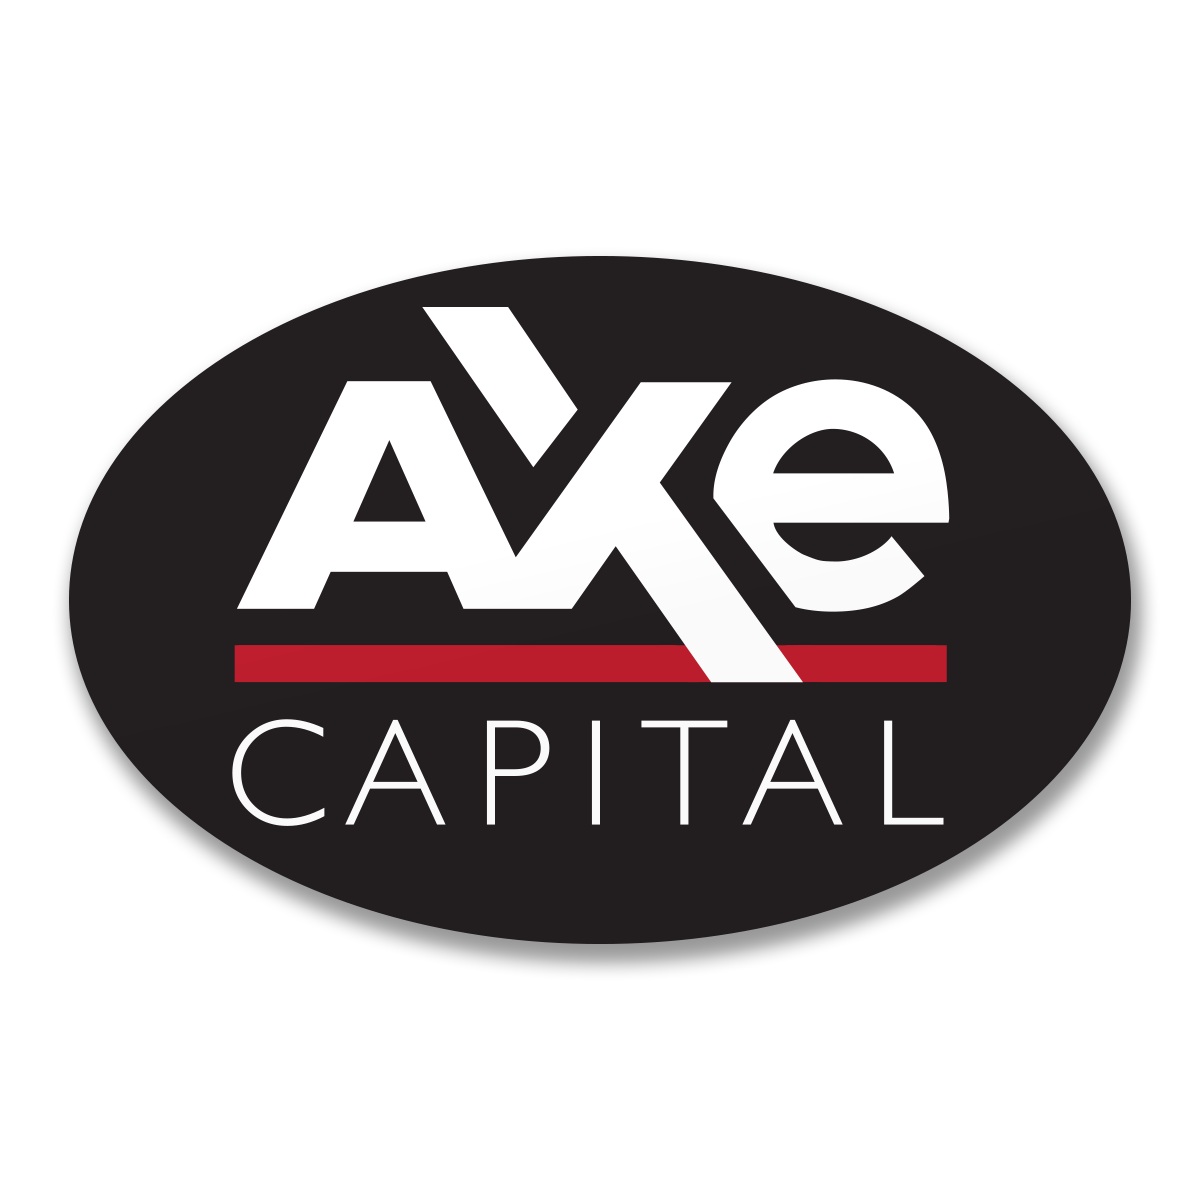 AXE Capital Oval Logo Sticker